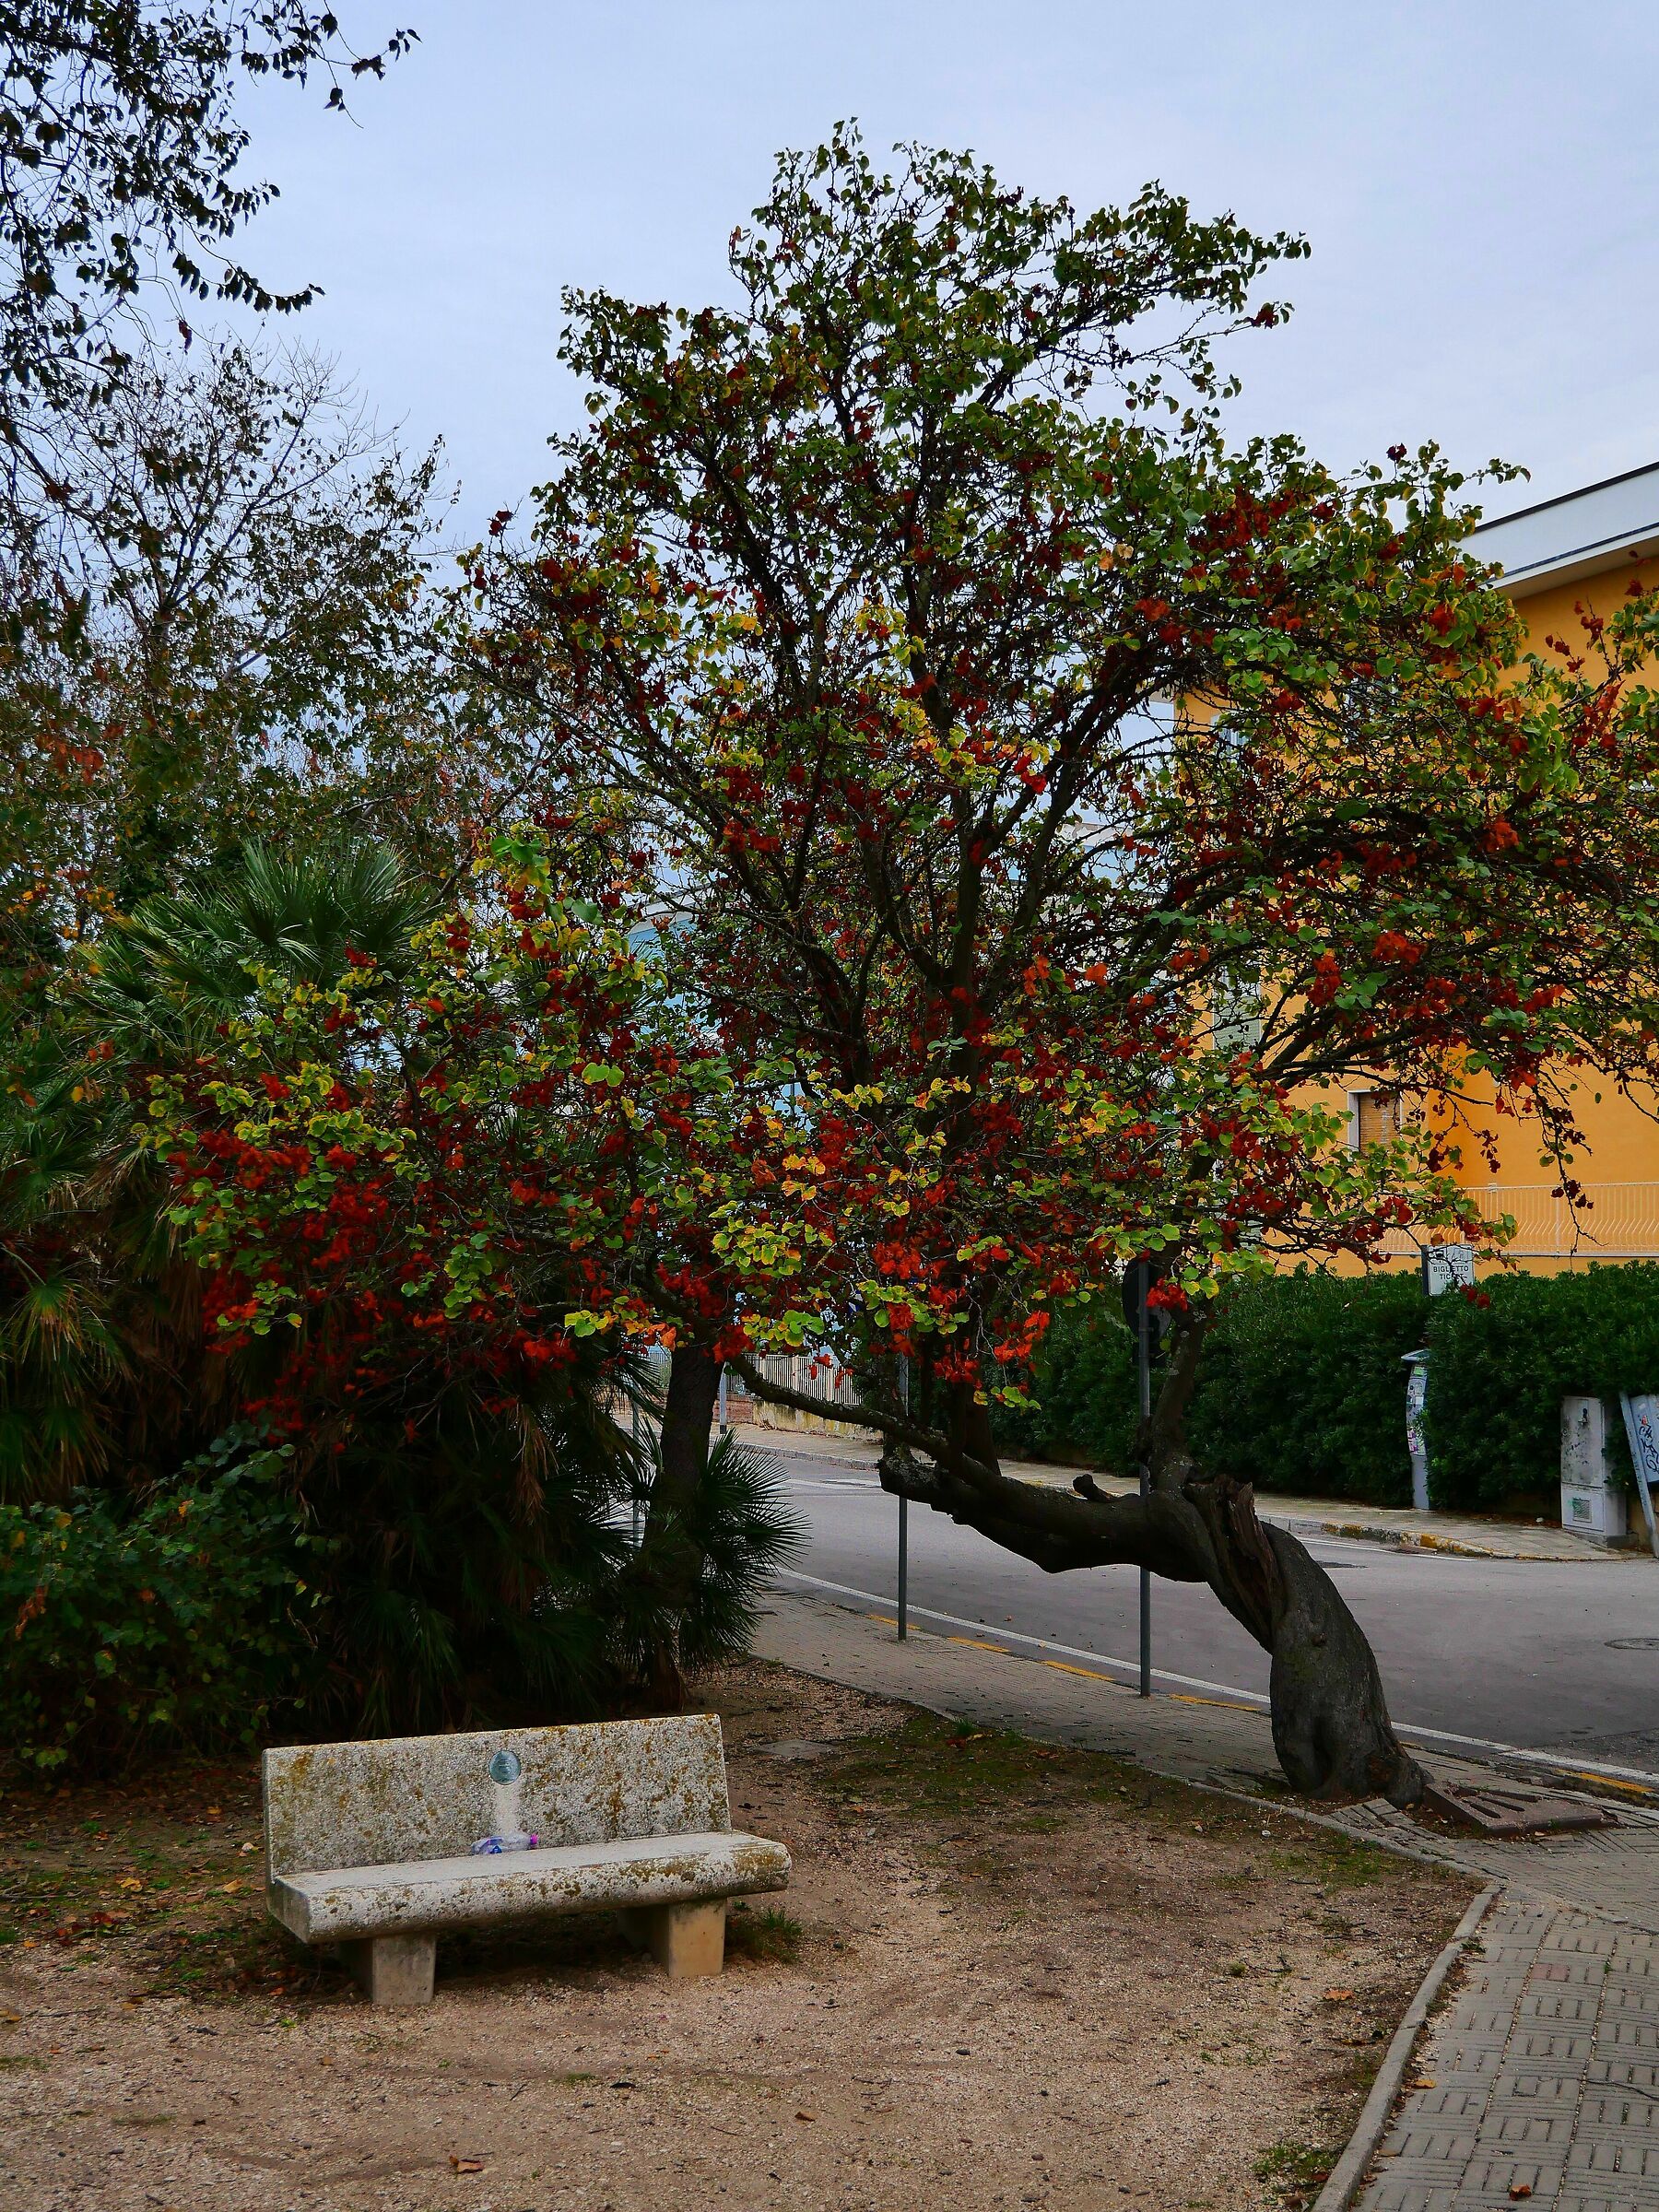 Tree and Bench - Giardinetti...